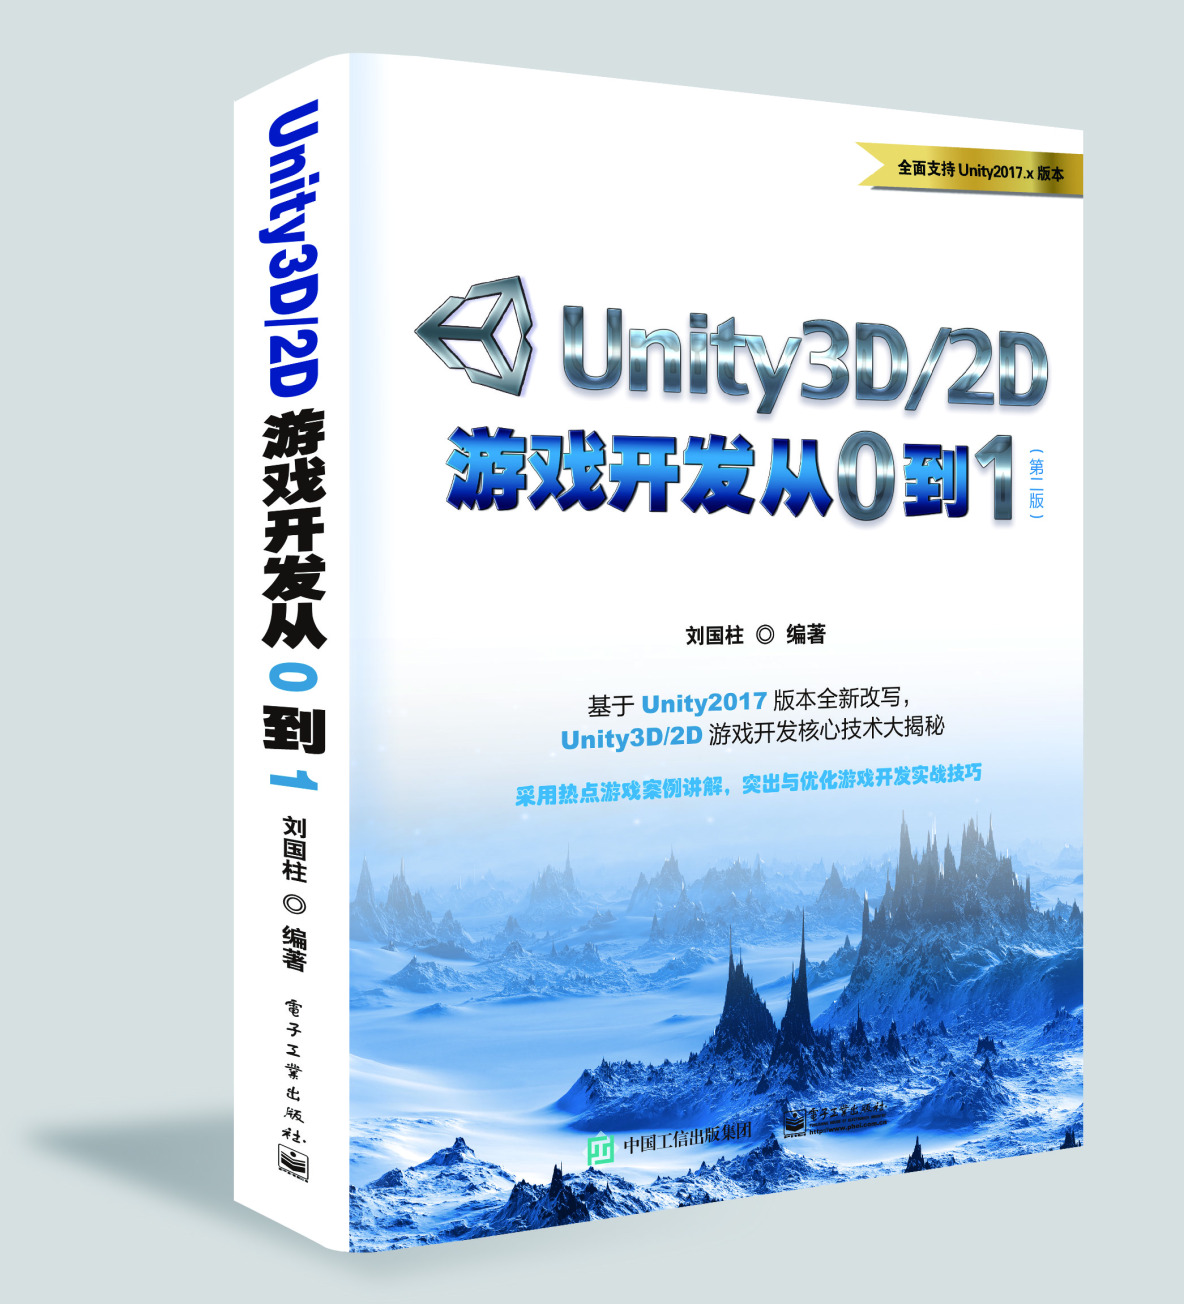 《Unity3D/2D游戏开发从0到1（第二版本）》 书稿完结总结_Unity2017版书籍